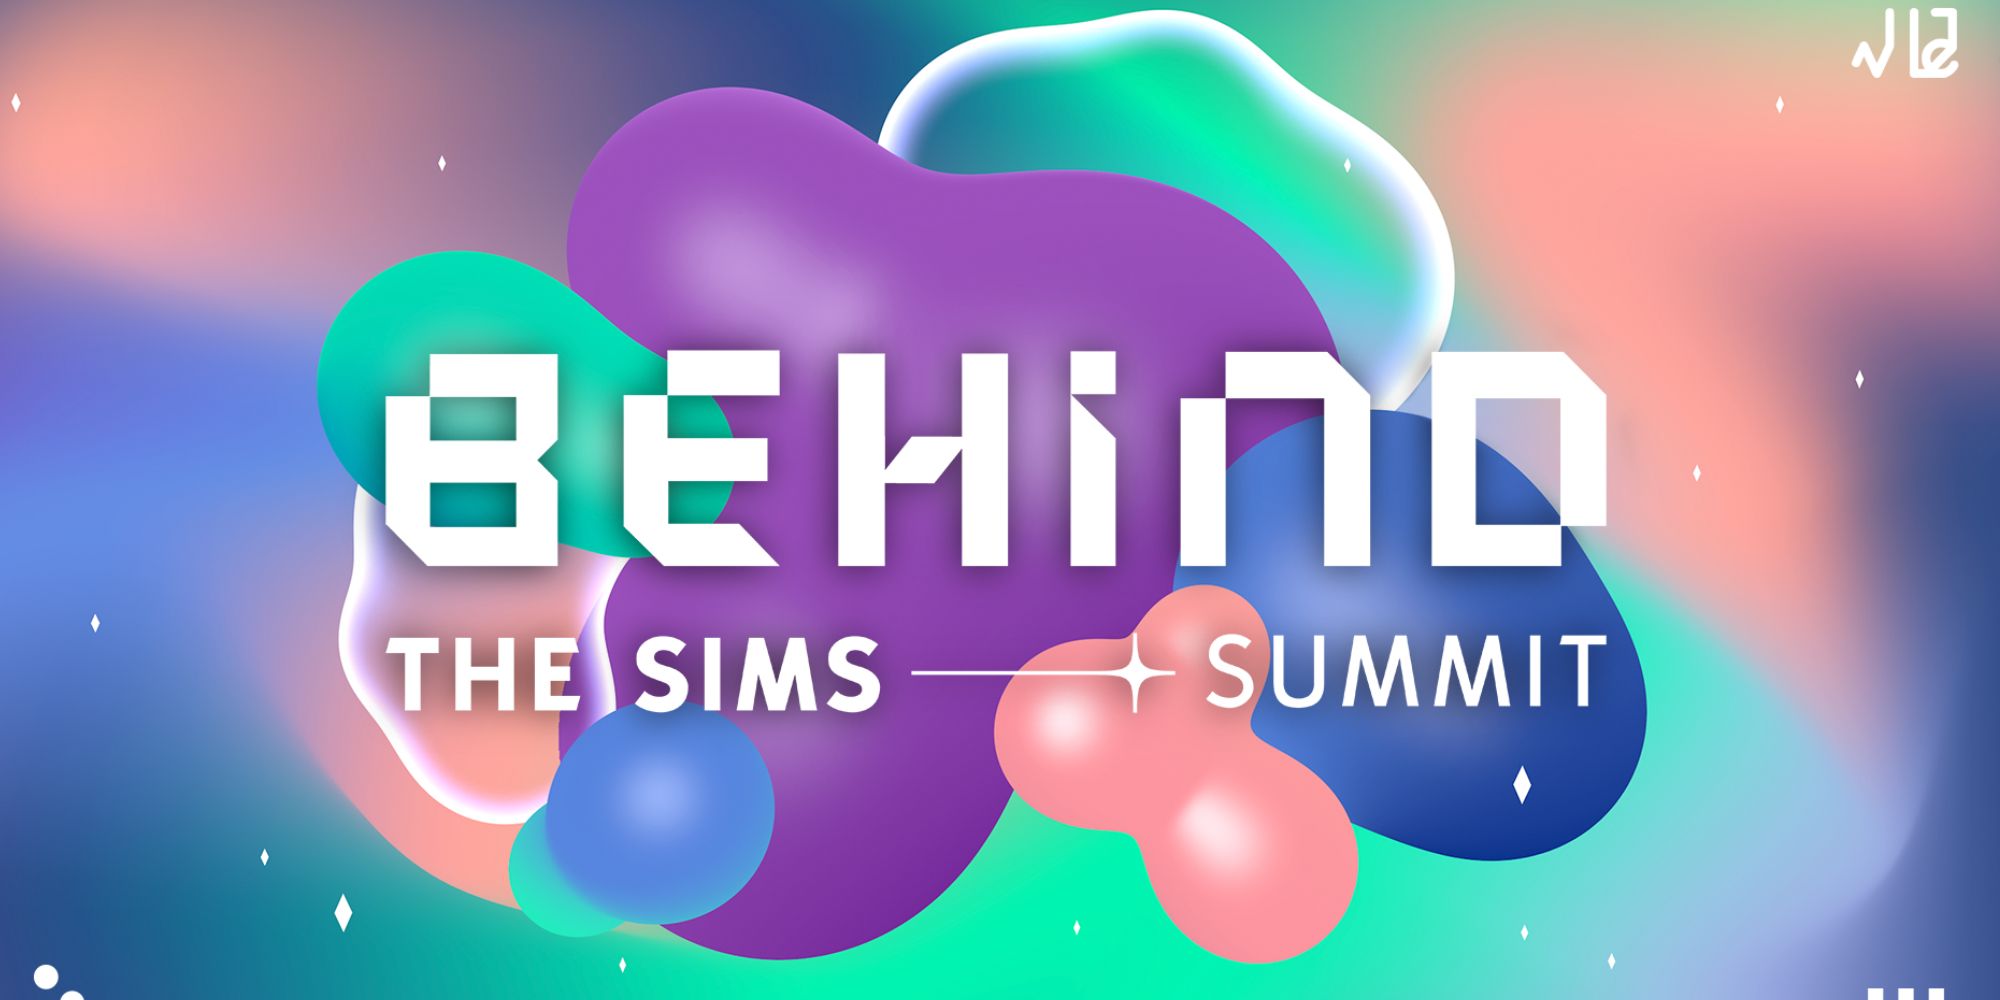 Sims 4 sims summit